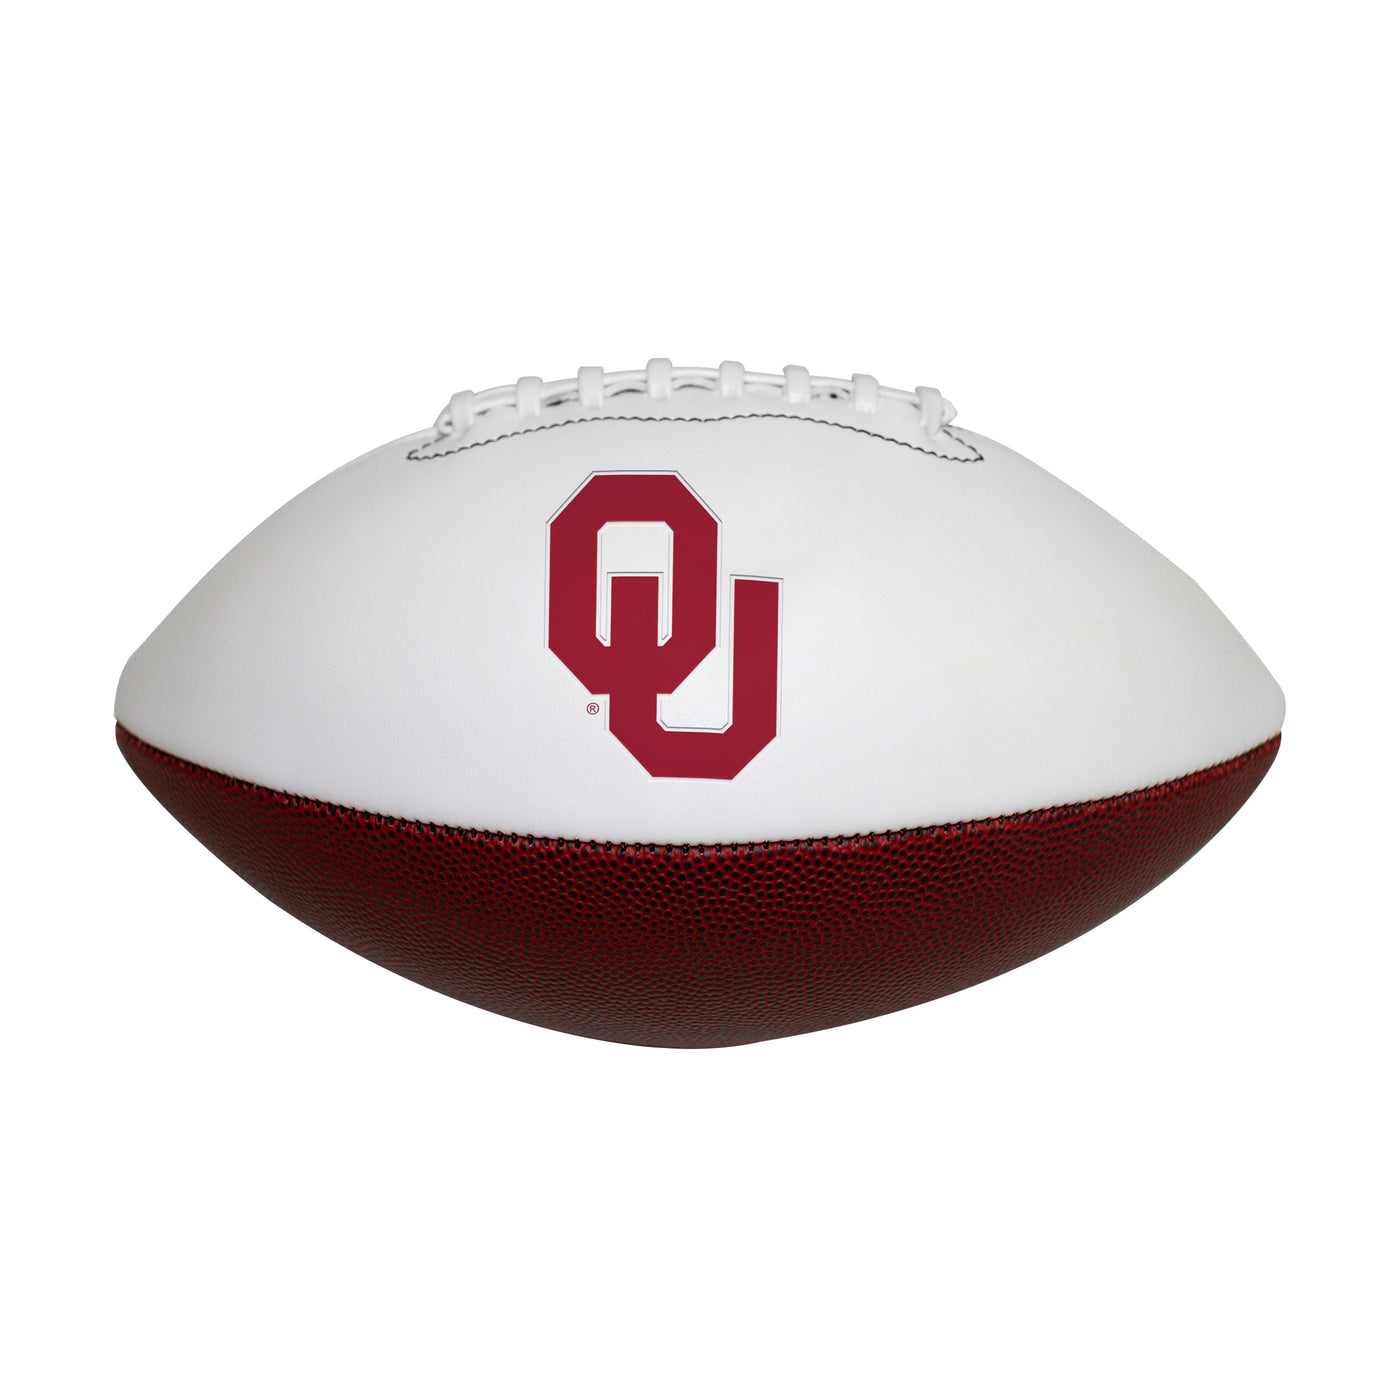 Oklahoma Official-Size Autograph Football